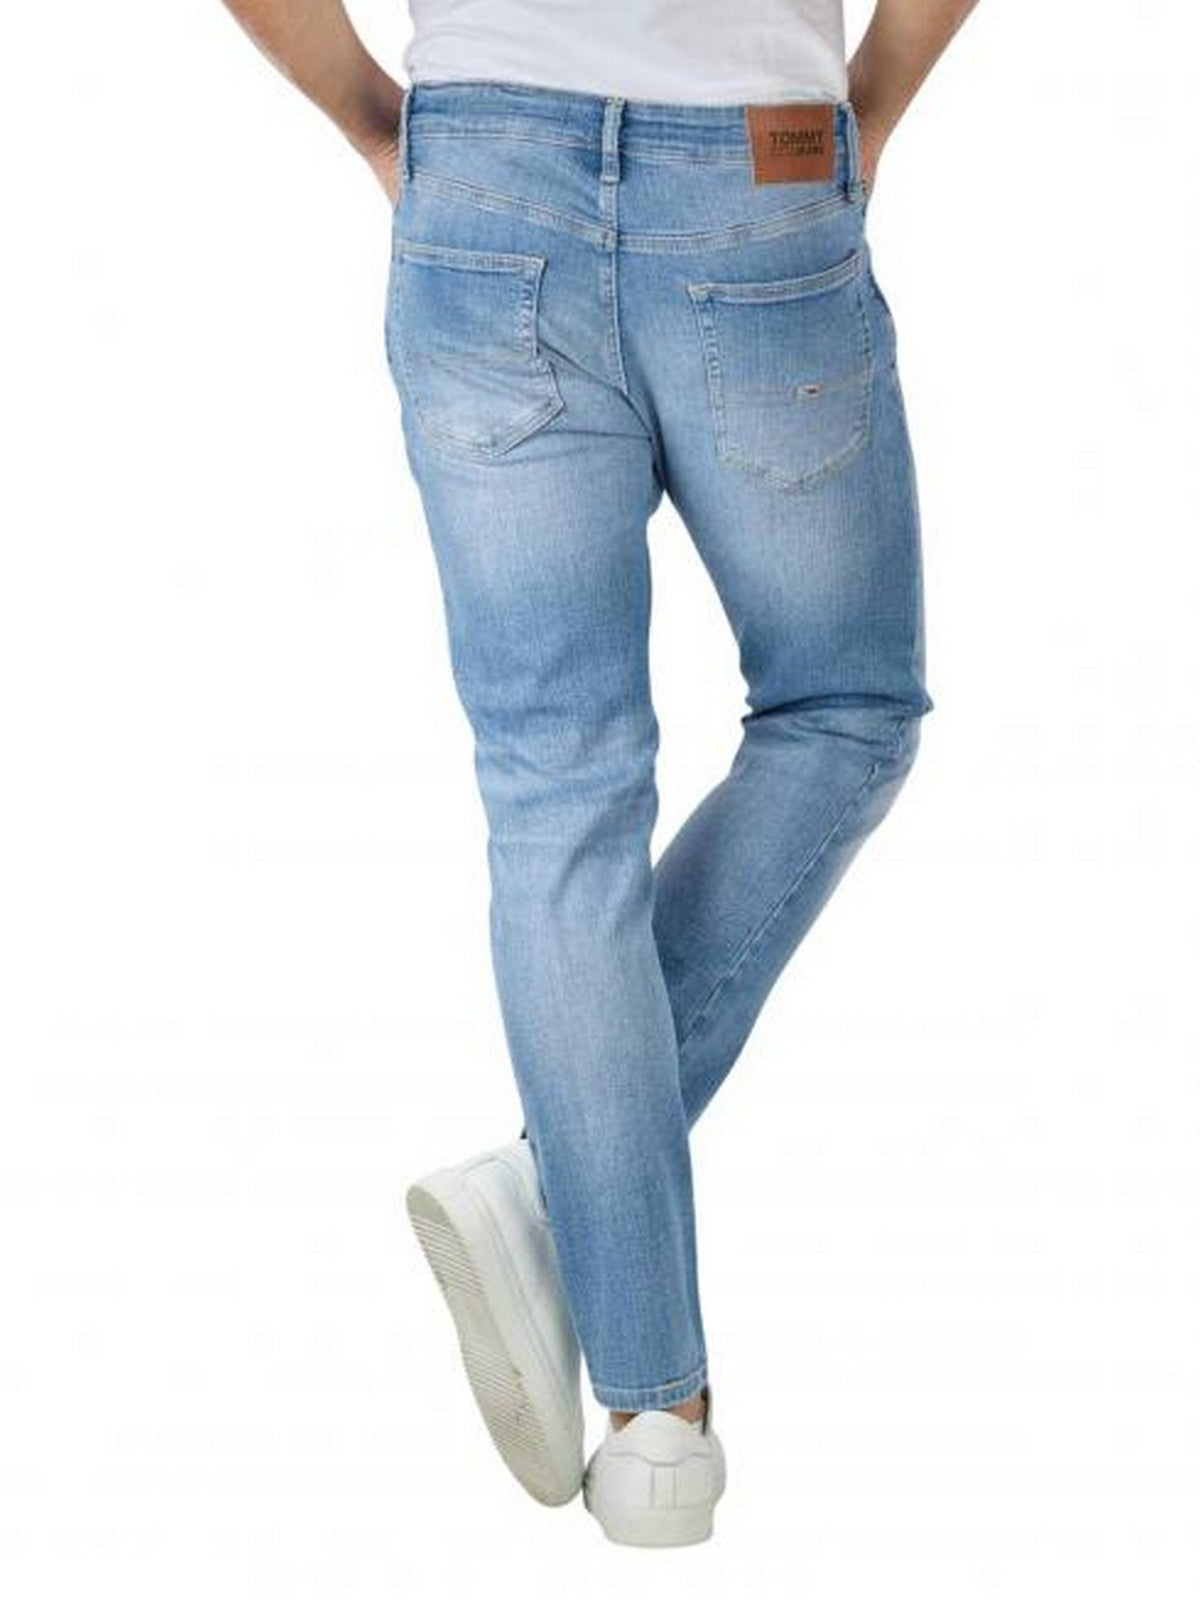 TOMMY HILFIGER Jeans Uomo  DM0DM16698 1AB Blu